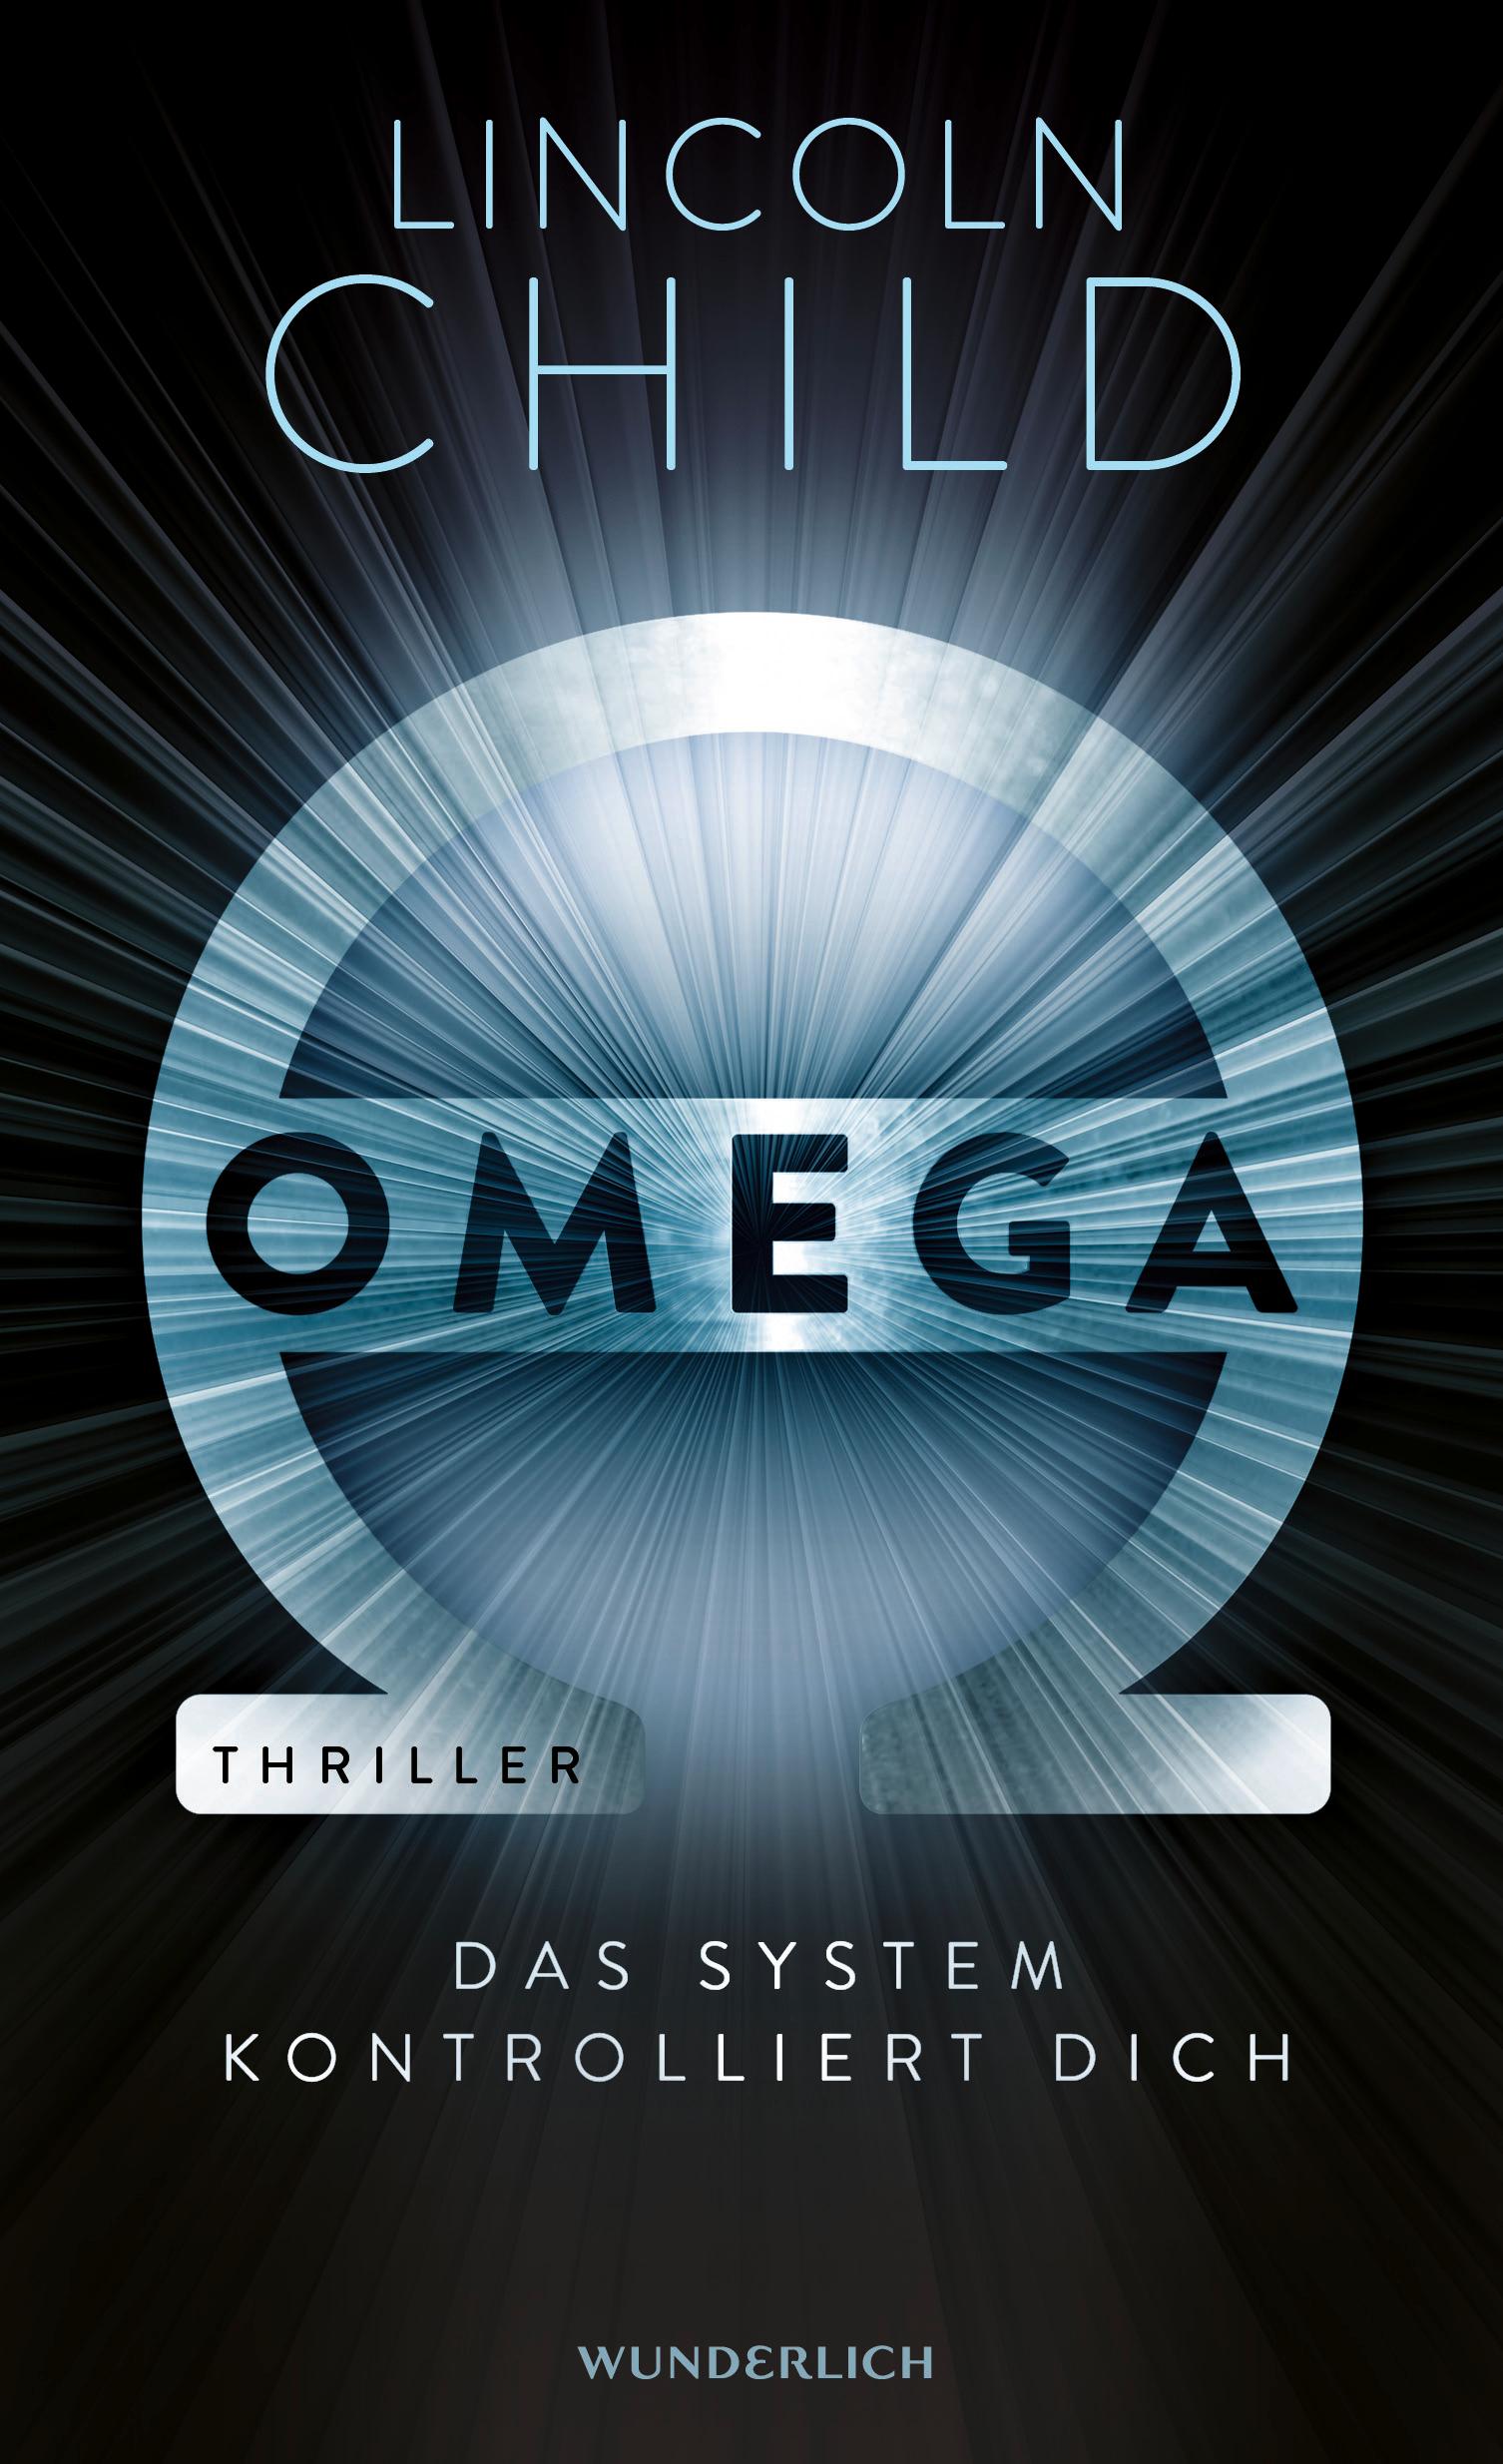 Omega Das System kontrolliert dich